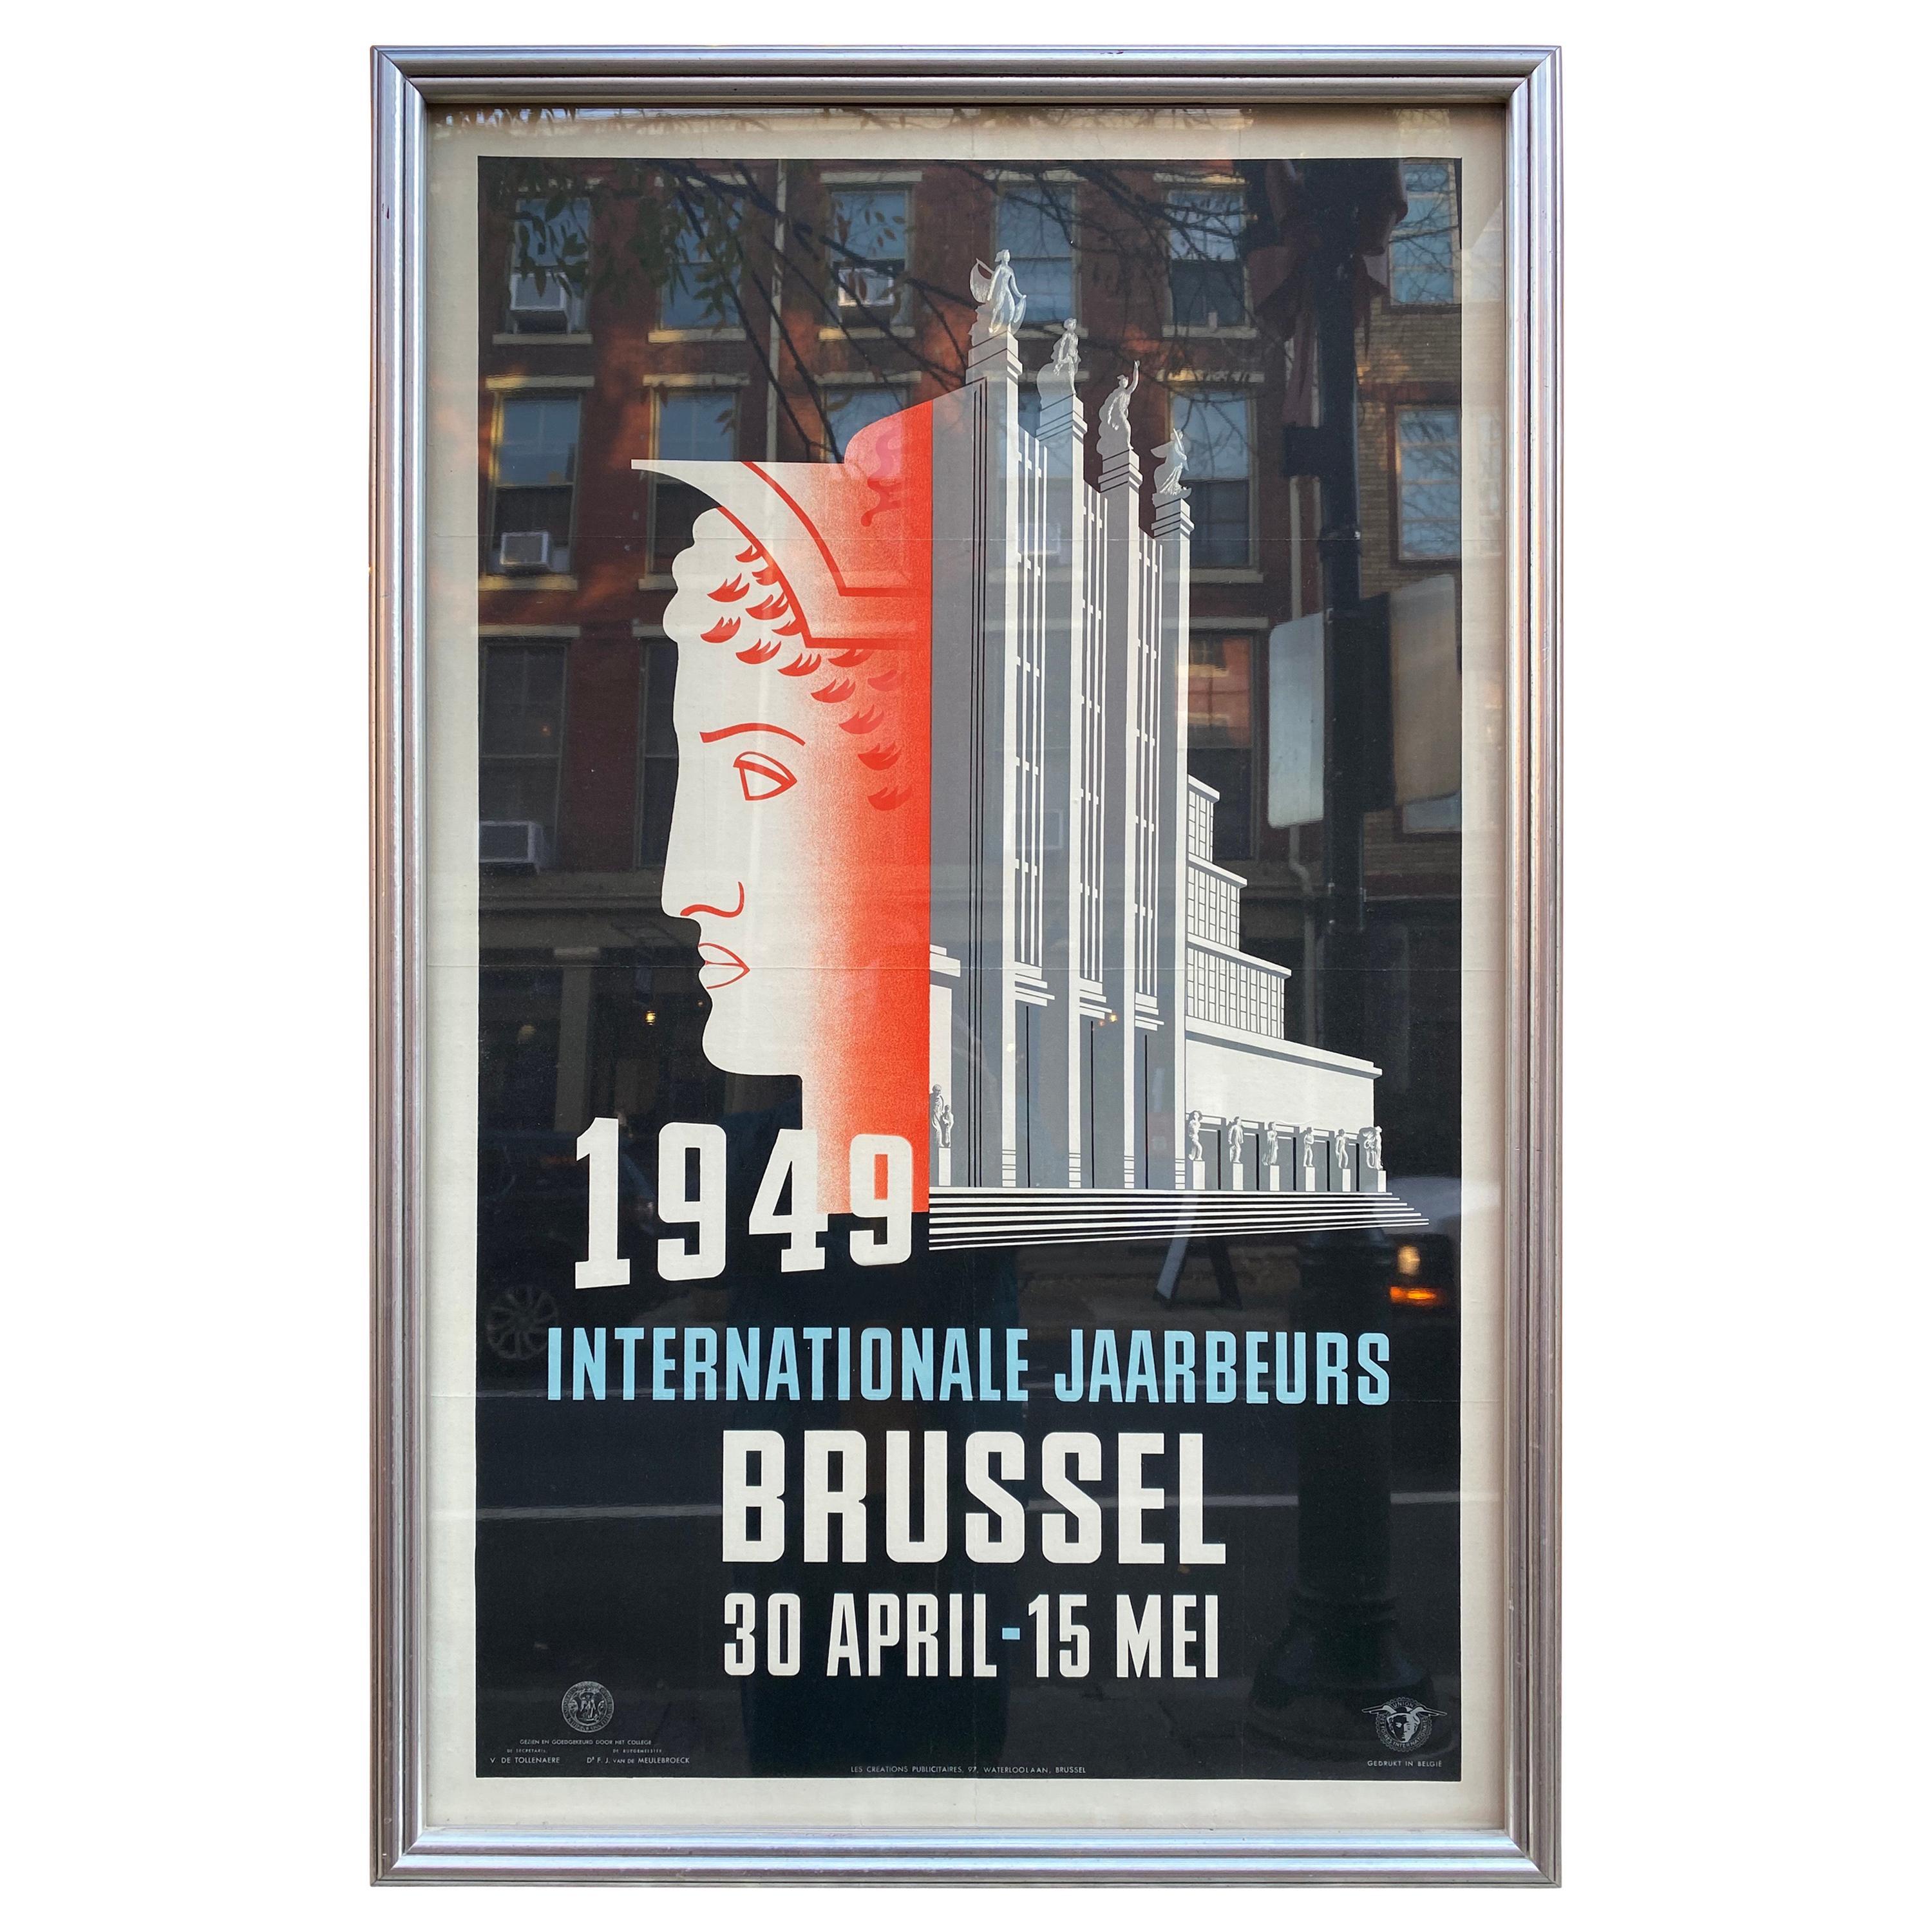 Brussel 1949 International Exhibition Poster